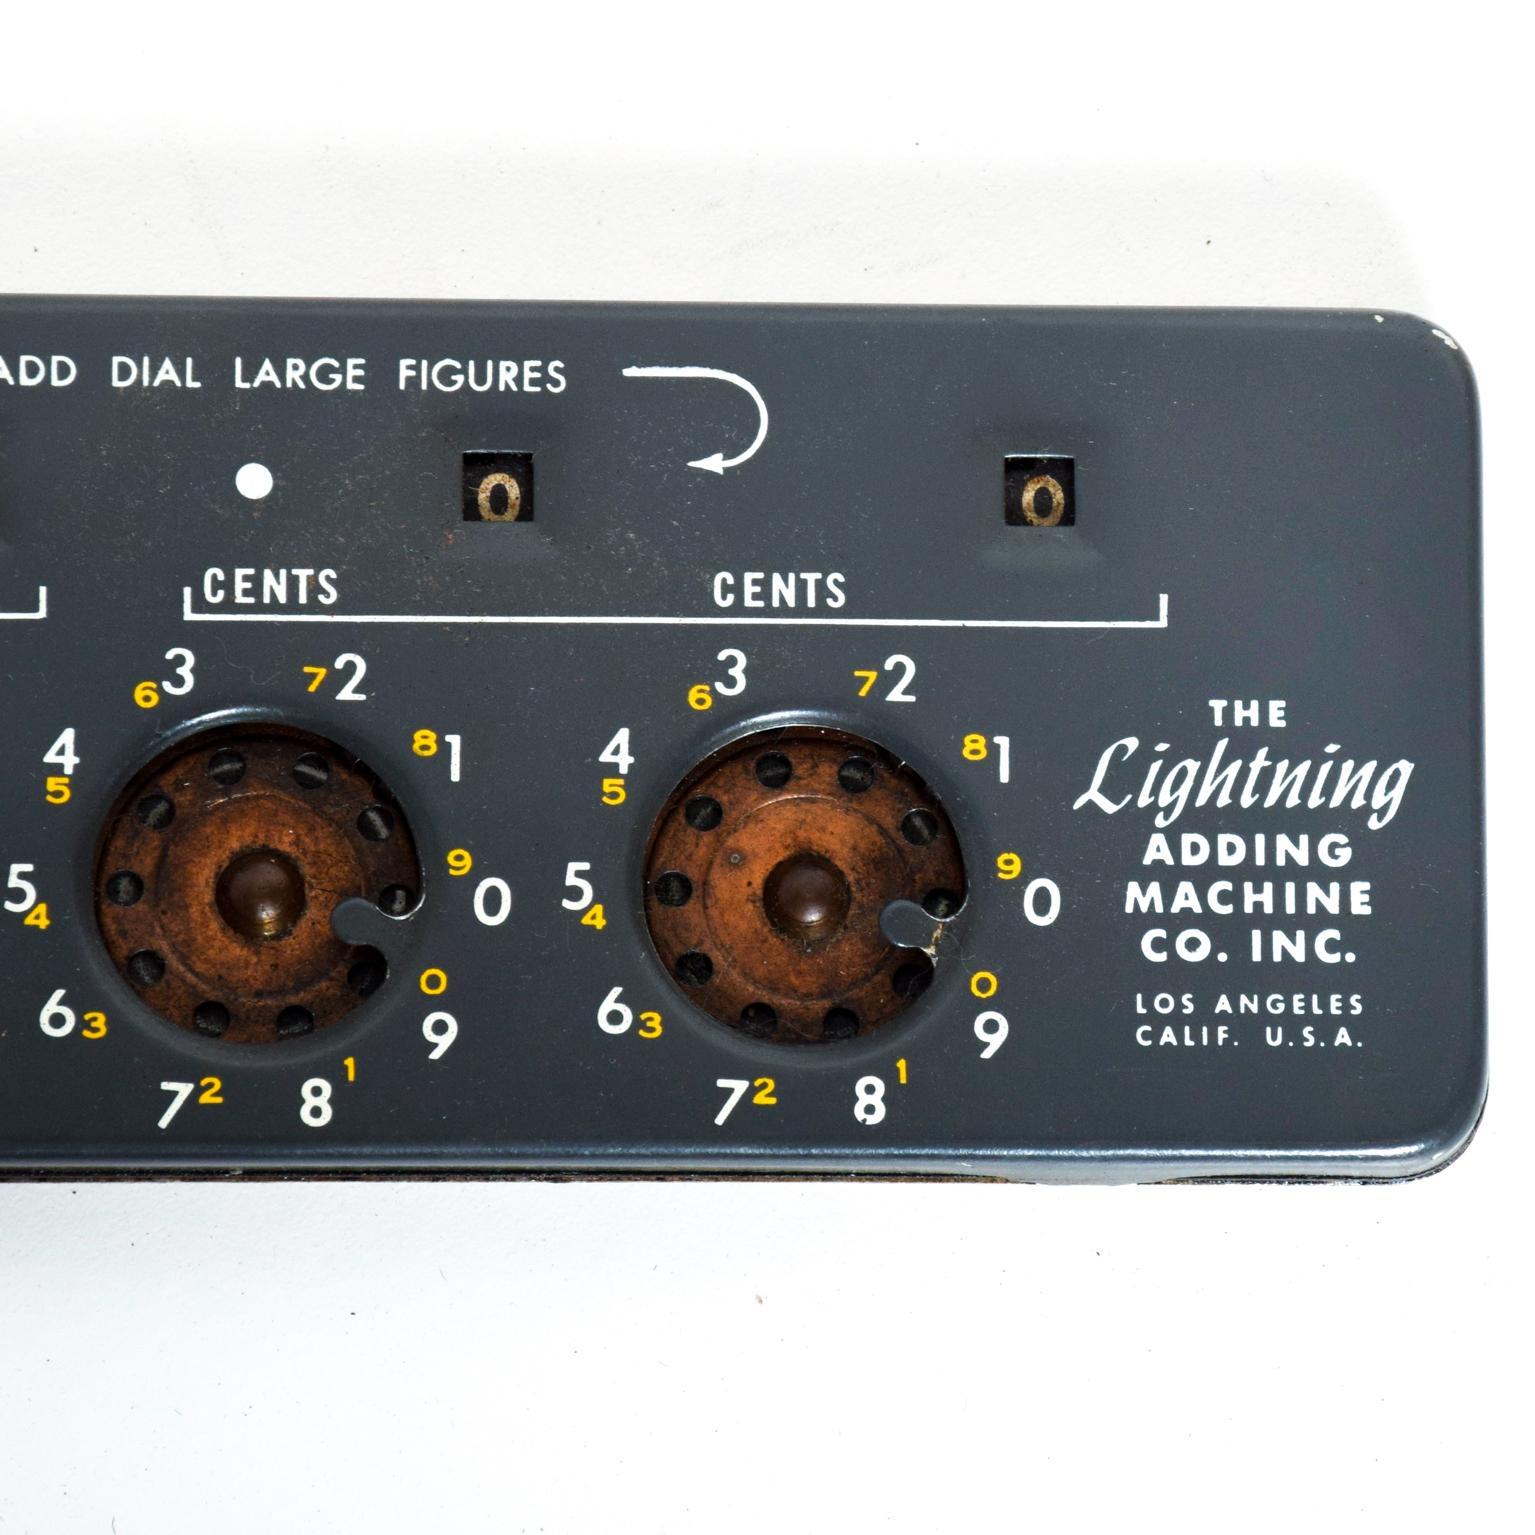 American Mid-Century Modern the Lightning Adding Machine, Vintage, Prior Calculator